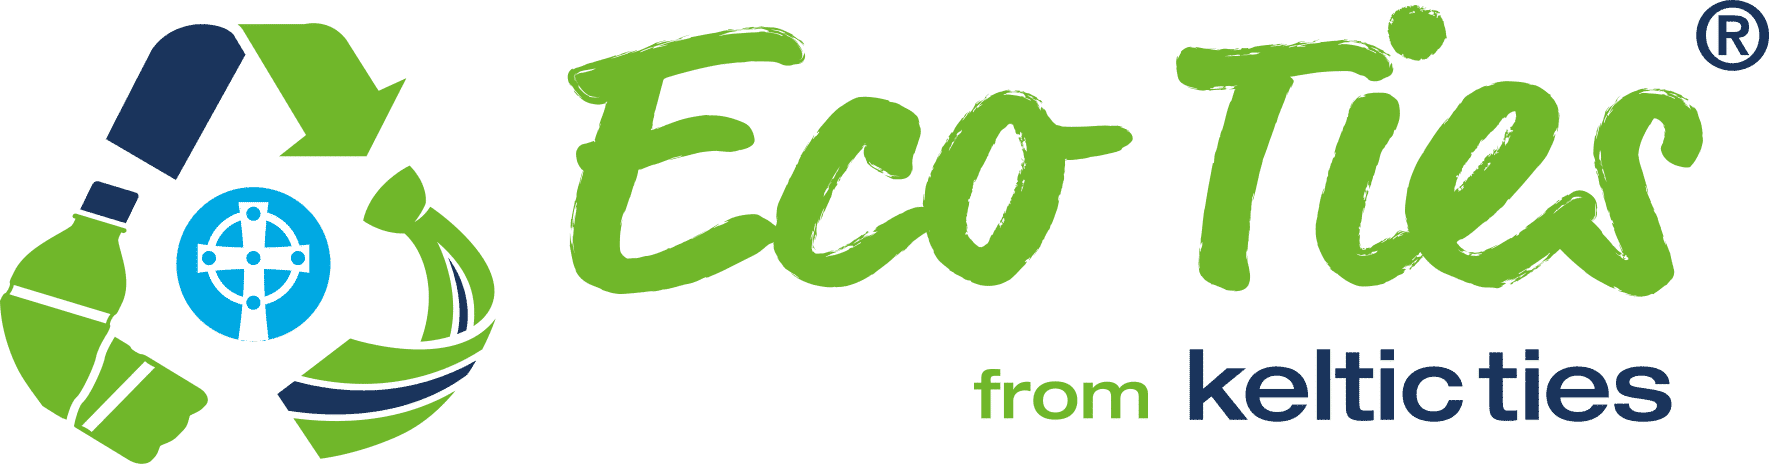 Keltic eco ties logo